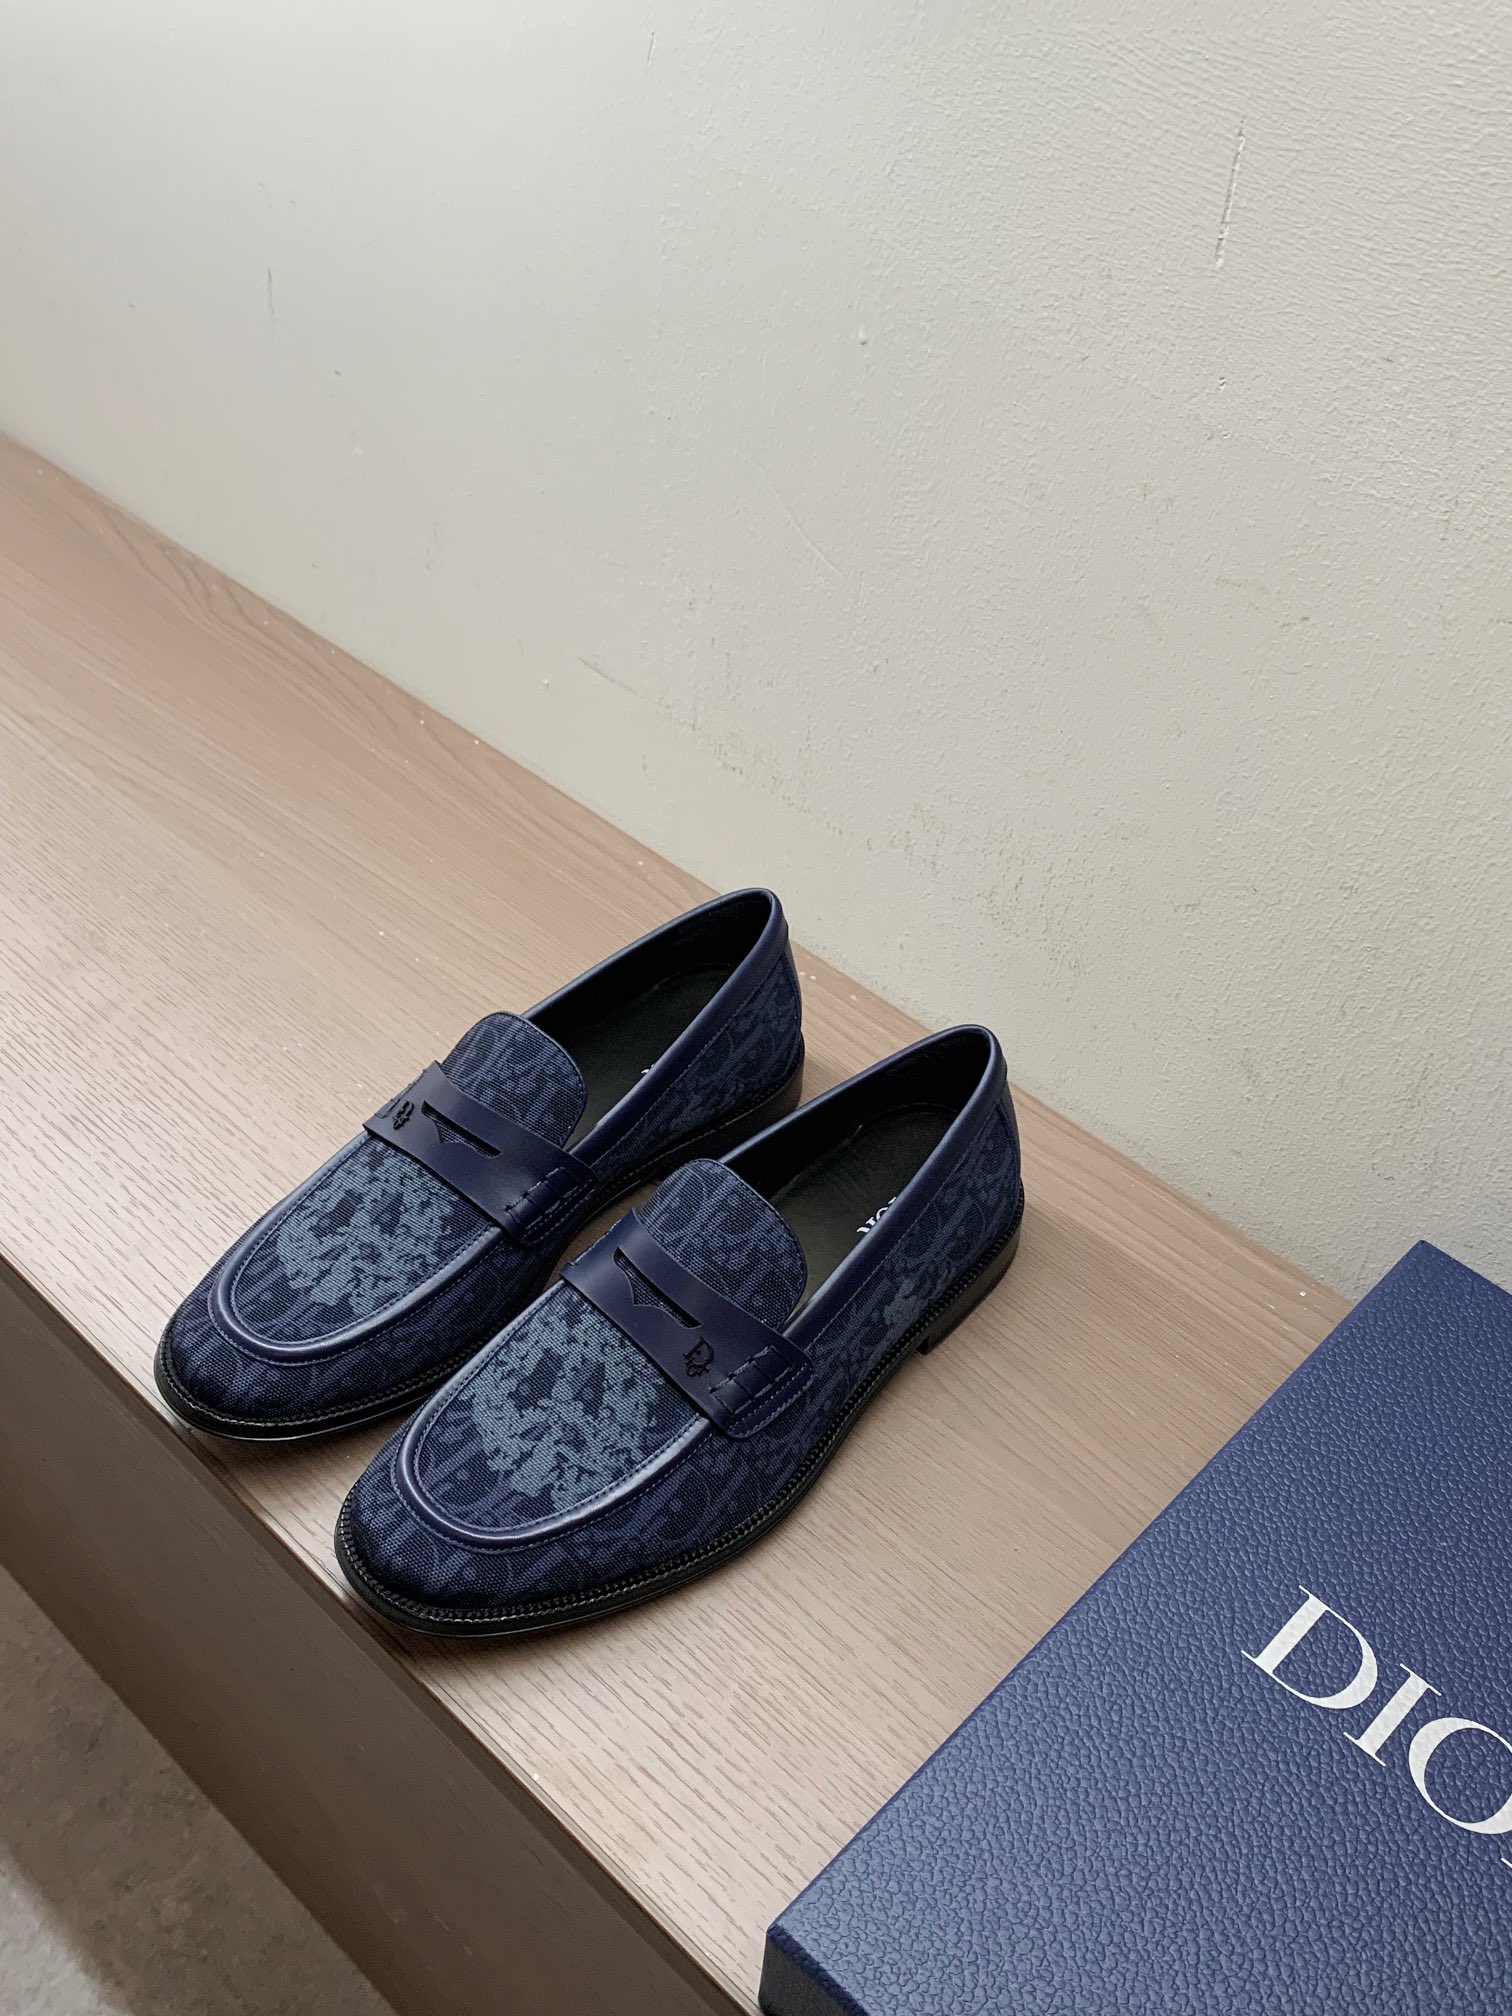 Dior Shoes Plain Toe Men Cowhide Genuine Leather Casual